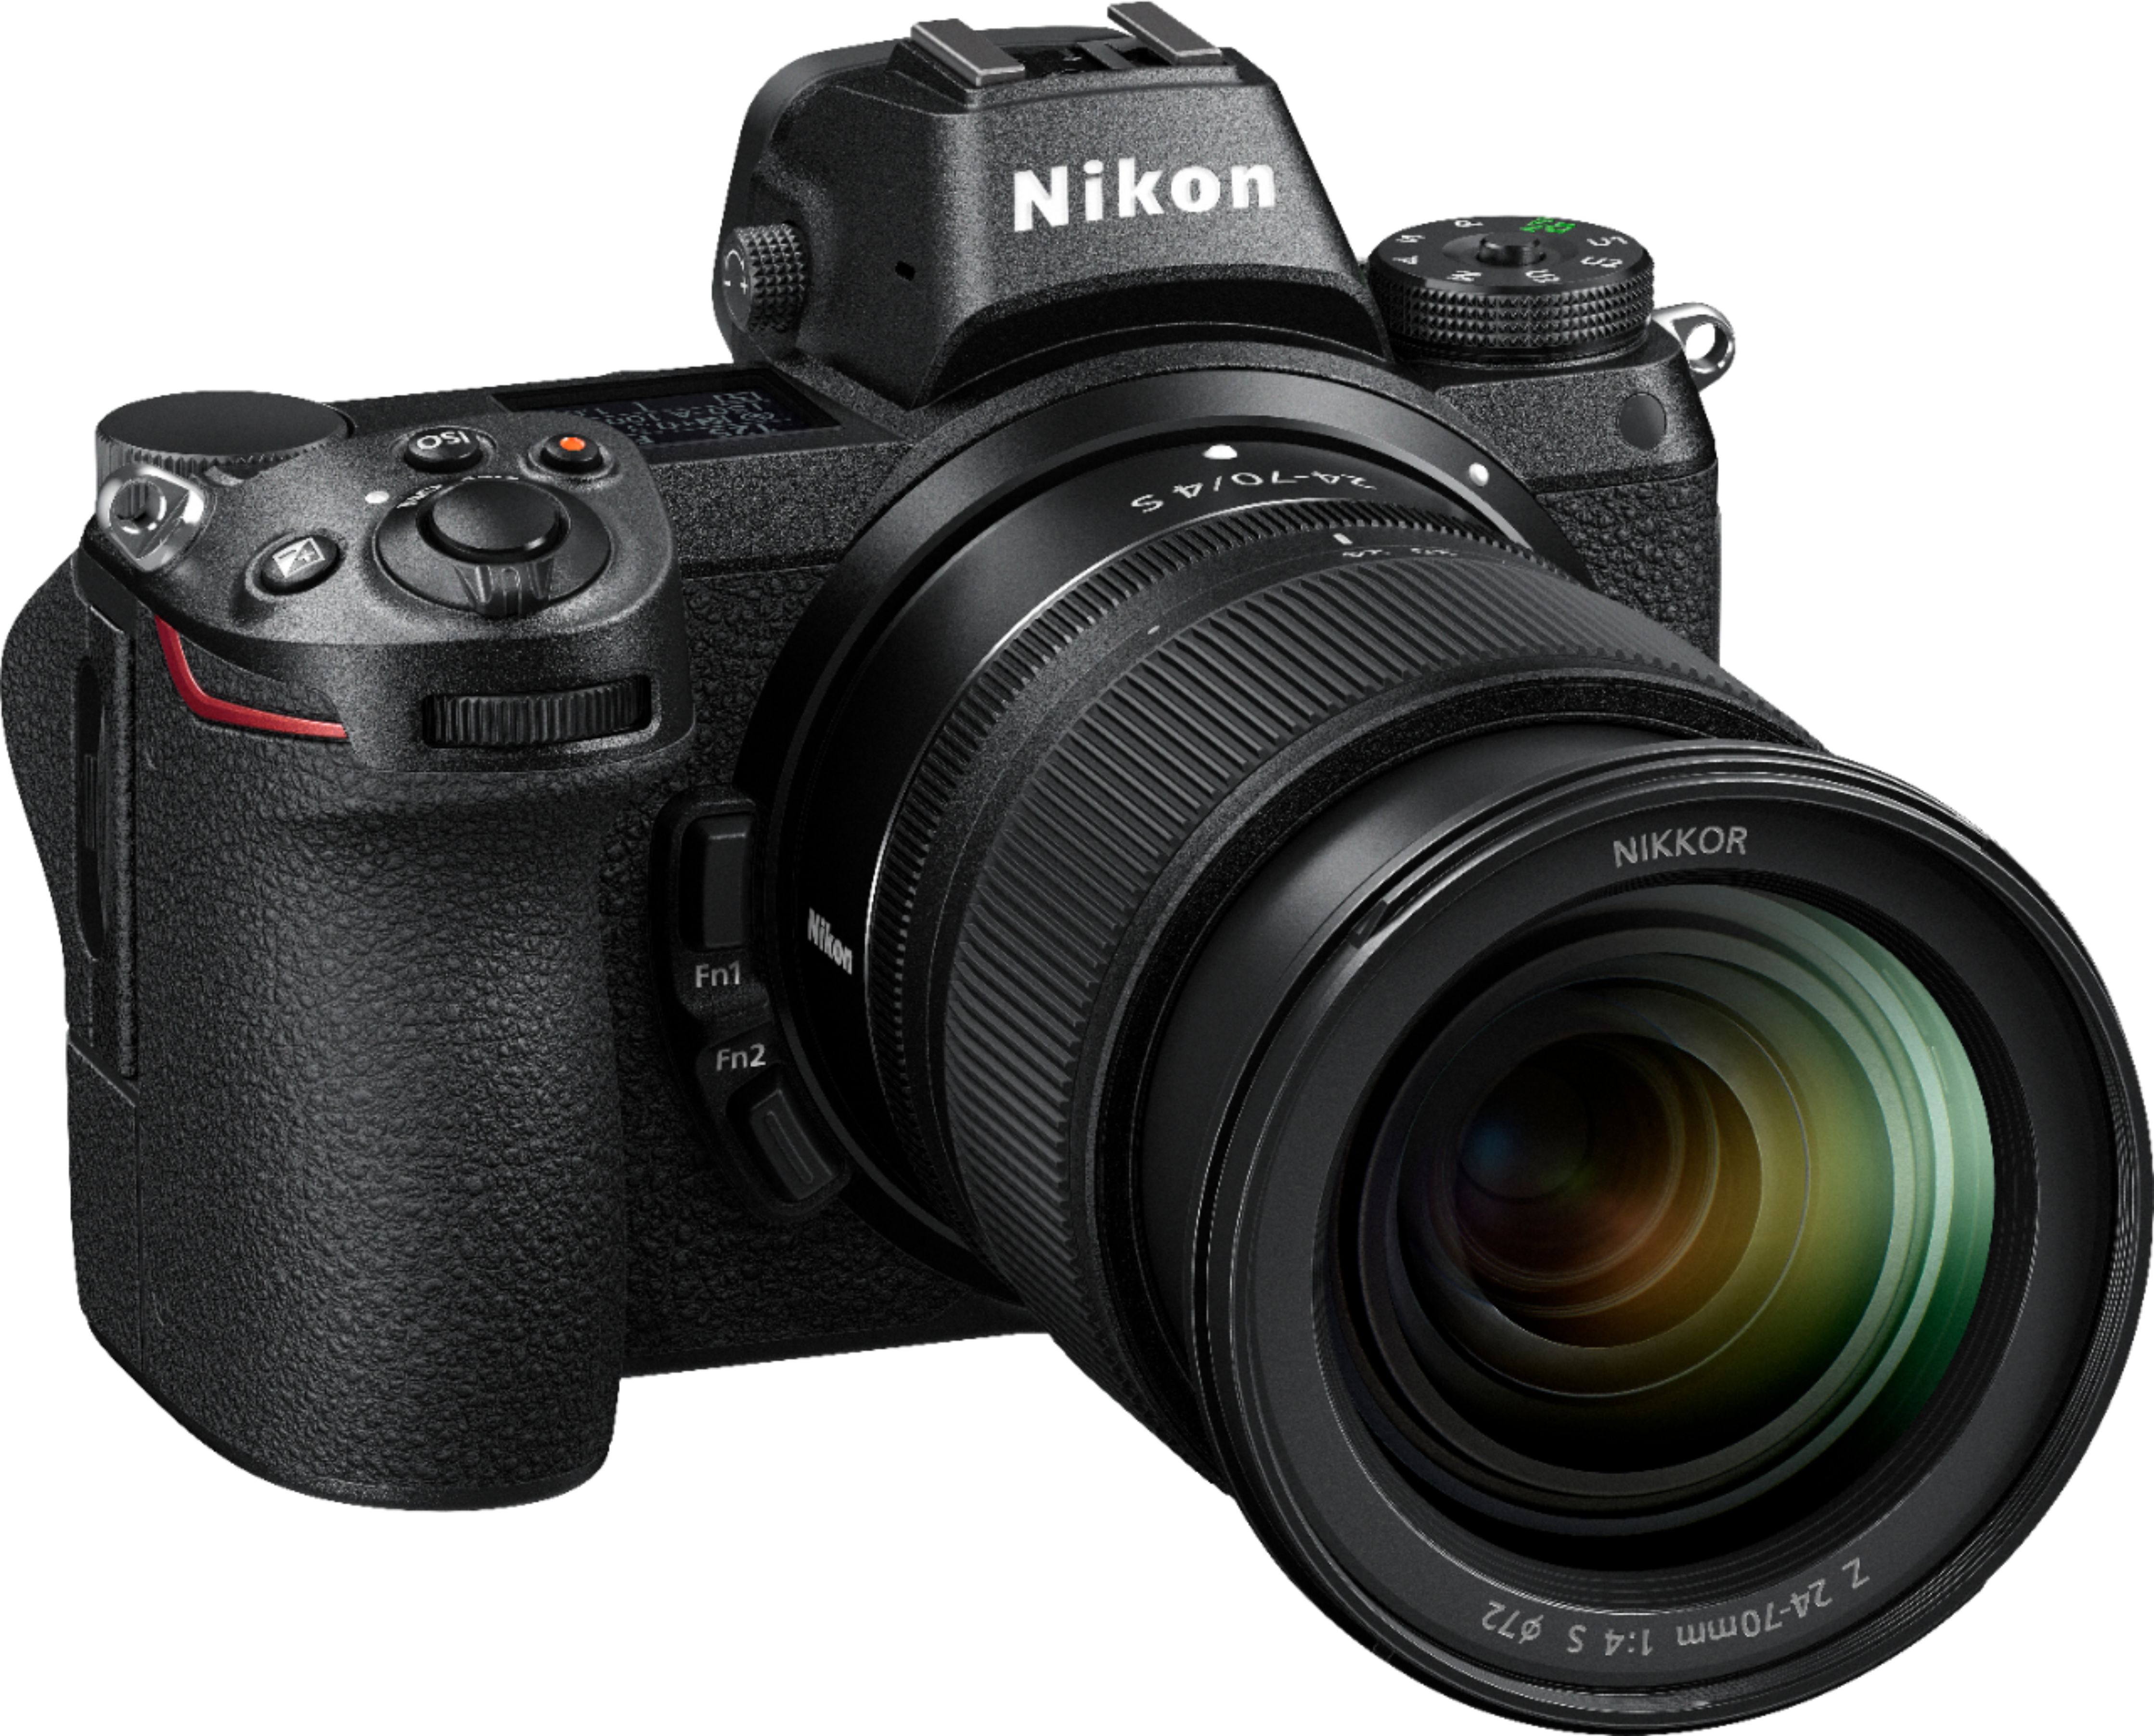 Angle View: Nikon - Z7 Mirrorless 4k Video Camera with NIKKOR Z 24-70mm Lens - Black